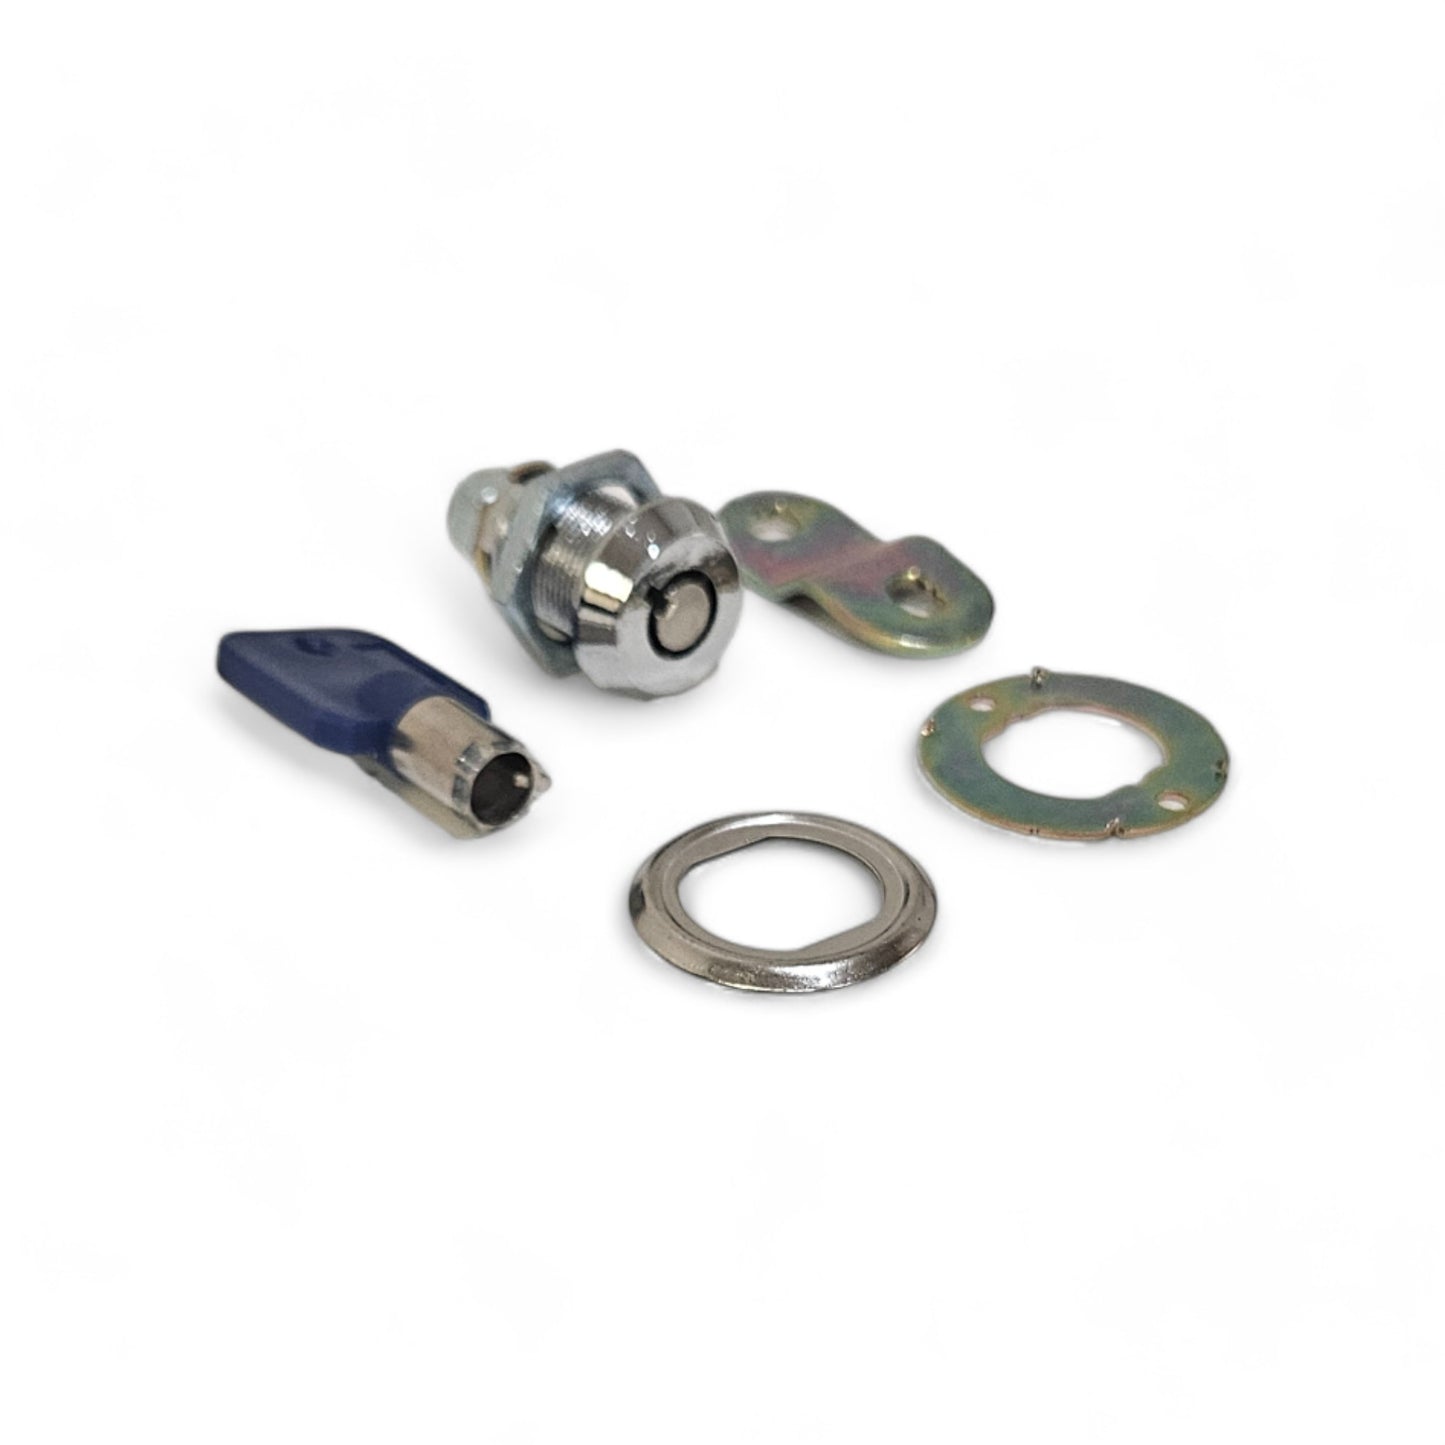 5pcs /lot Tubular Cam Locks #6083